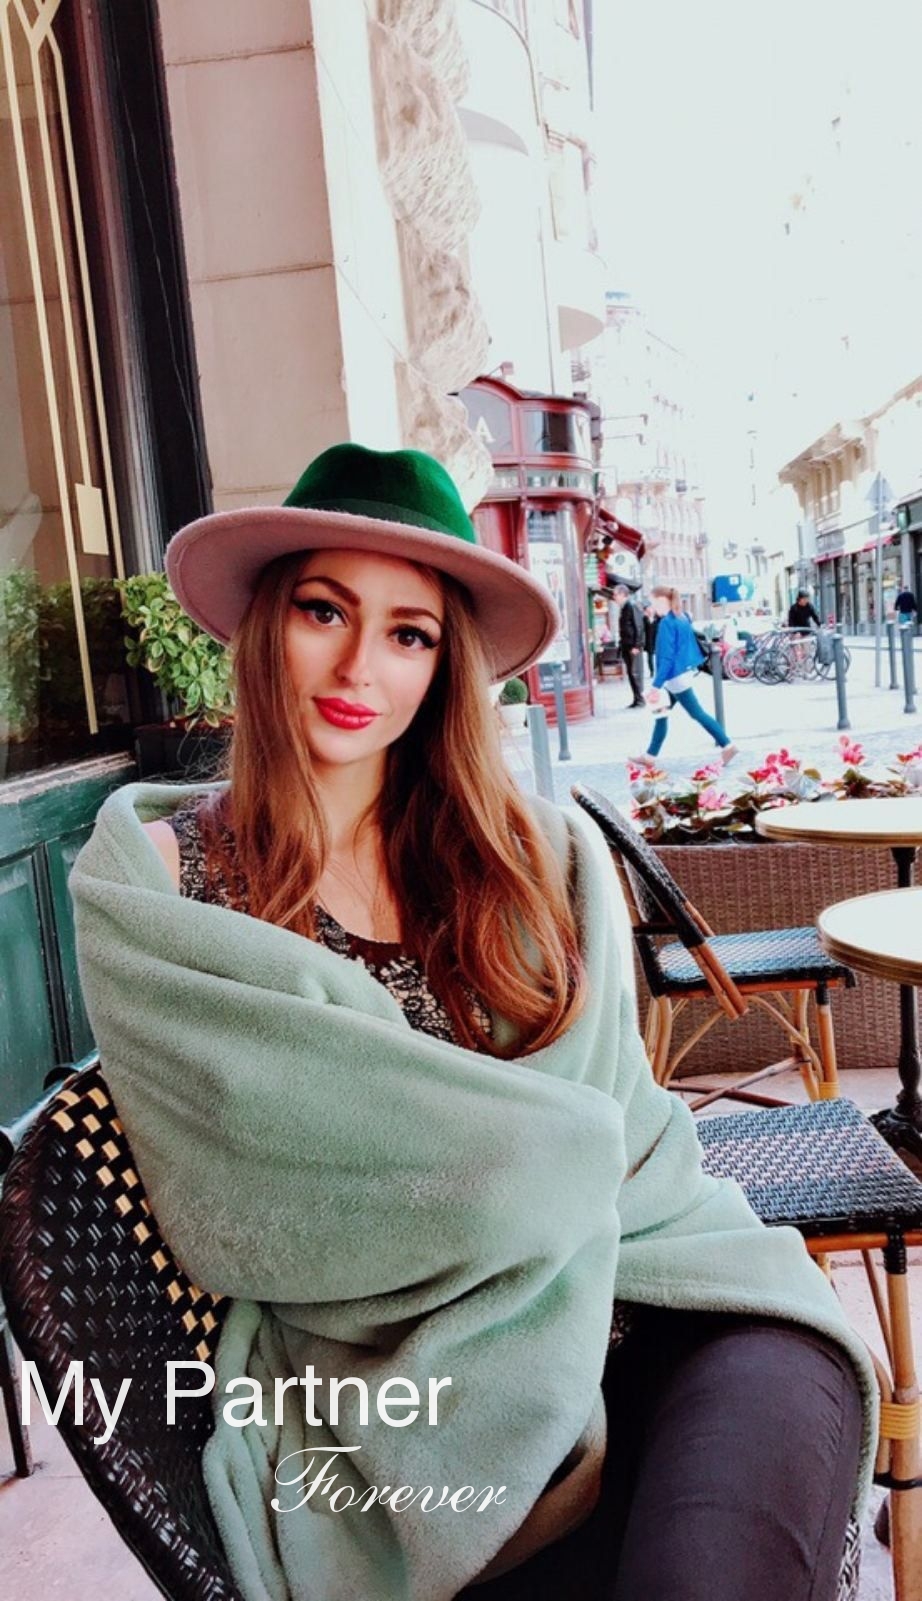 Datingsite to Meet Teona from Kiev, Ukraine